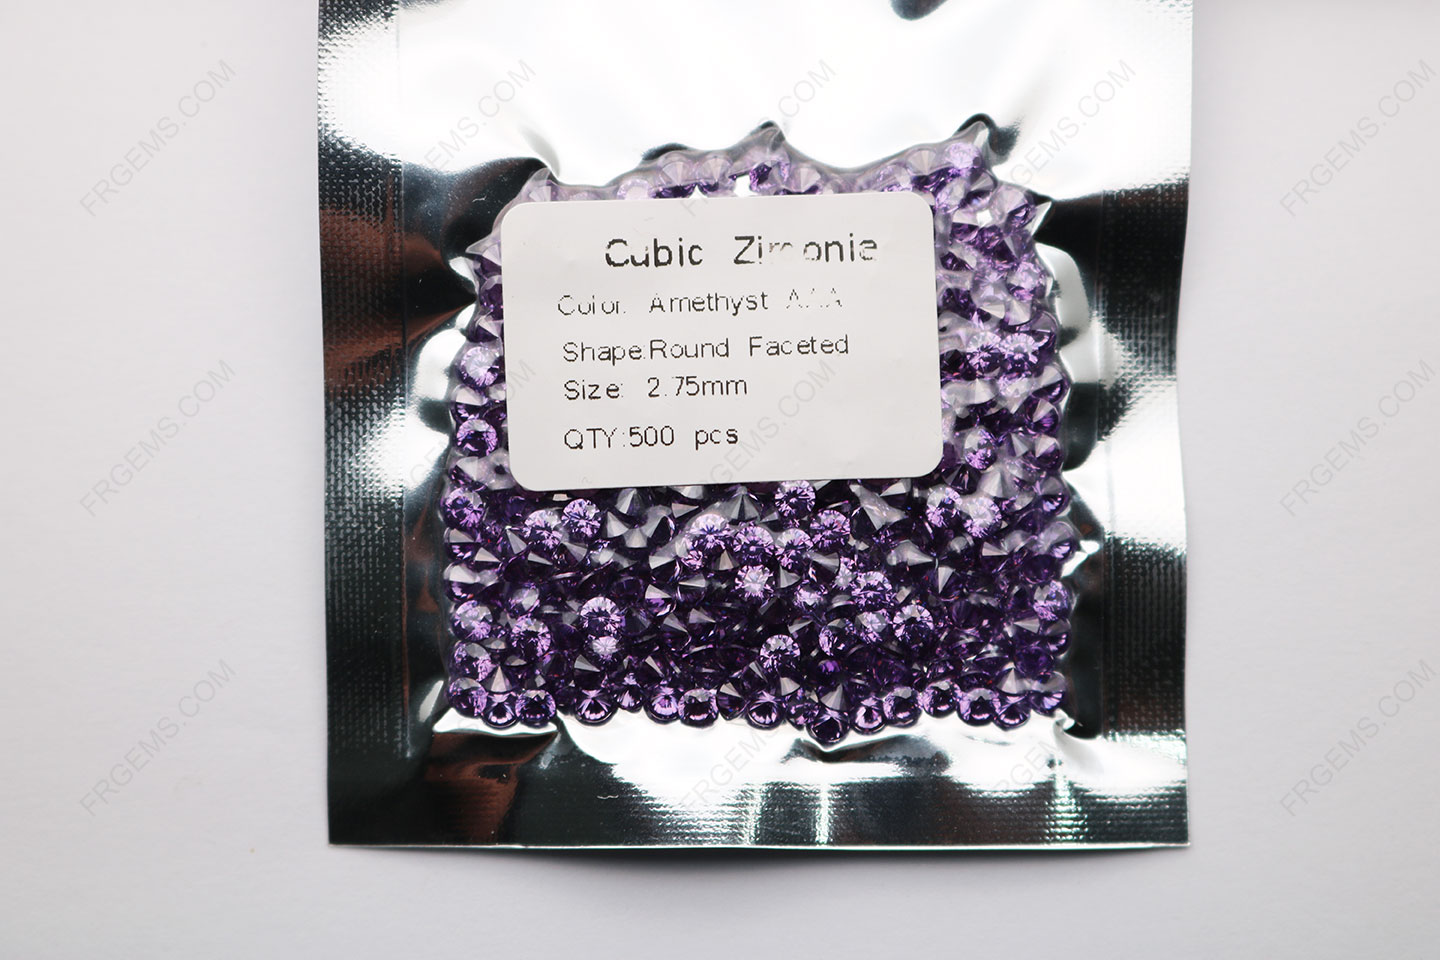 Cubic Zirconia Amethyst Round Shape diamond faceted cut 2.75mm stones CZ10 IMG_3800